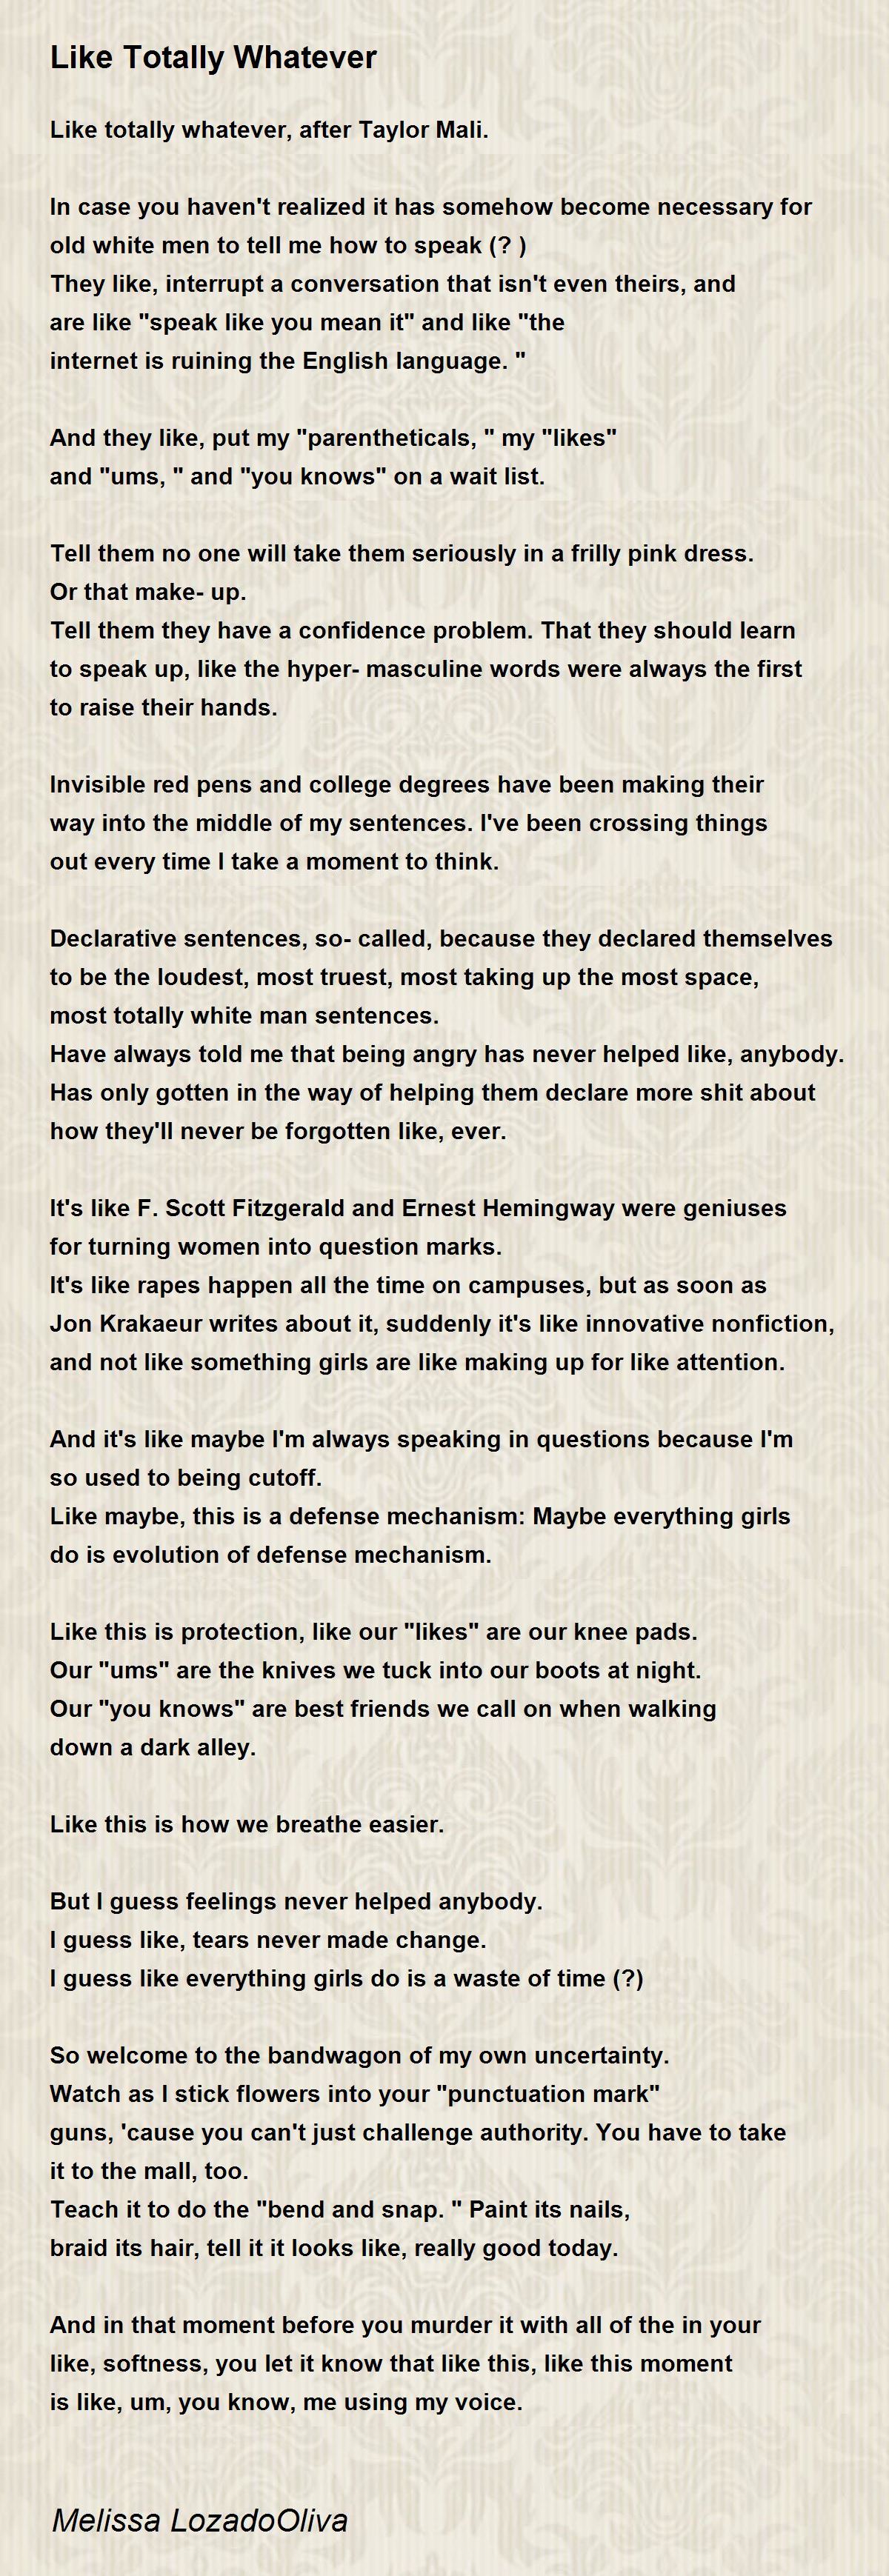 Like Totally Whatever Poem by Melissa LozadoOliva - Poem Hunter